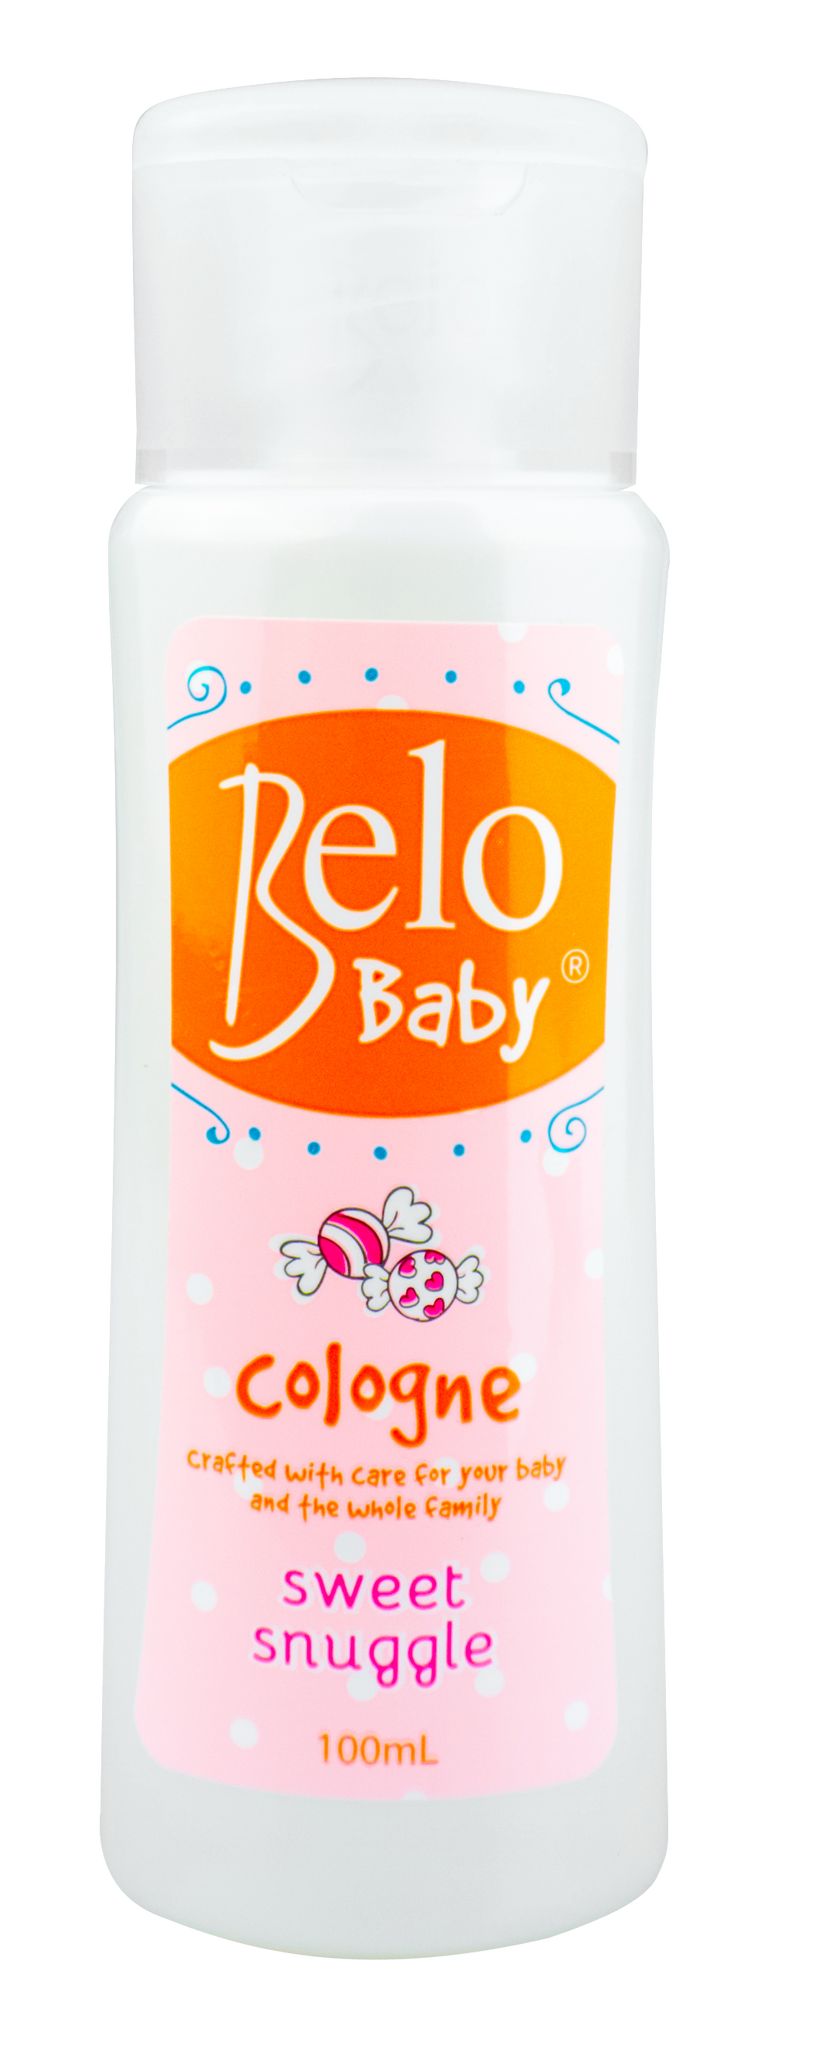 Belo Baby Cologne Sweet Snuggle 100ml